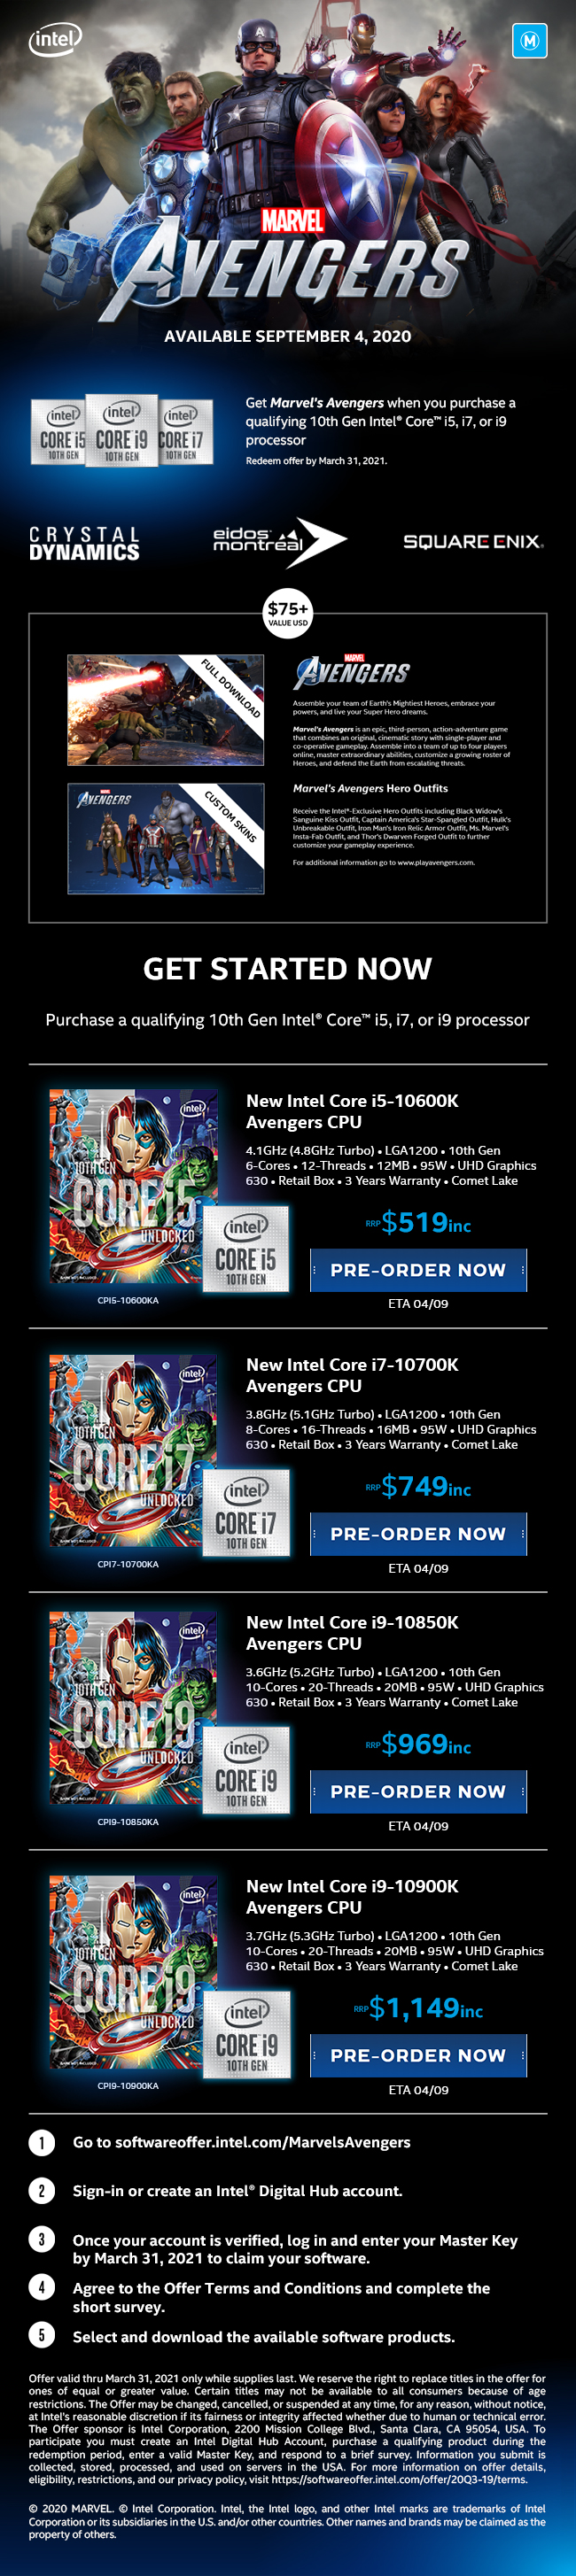 Intel Avengers Promo